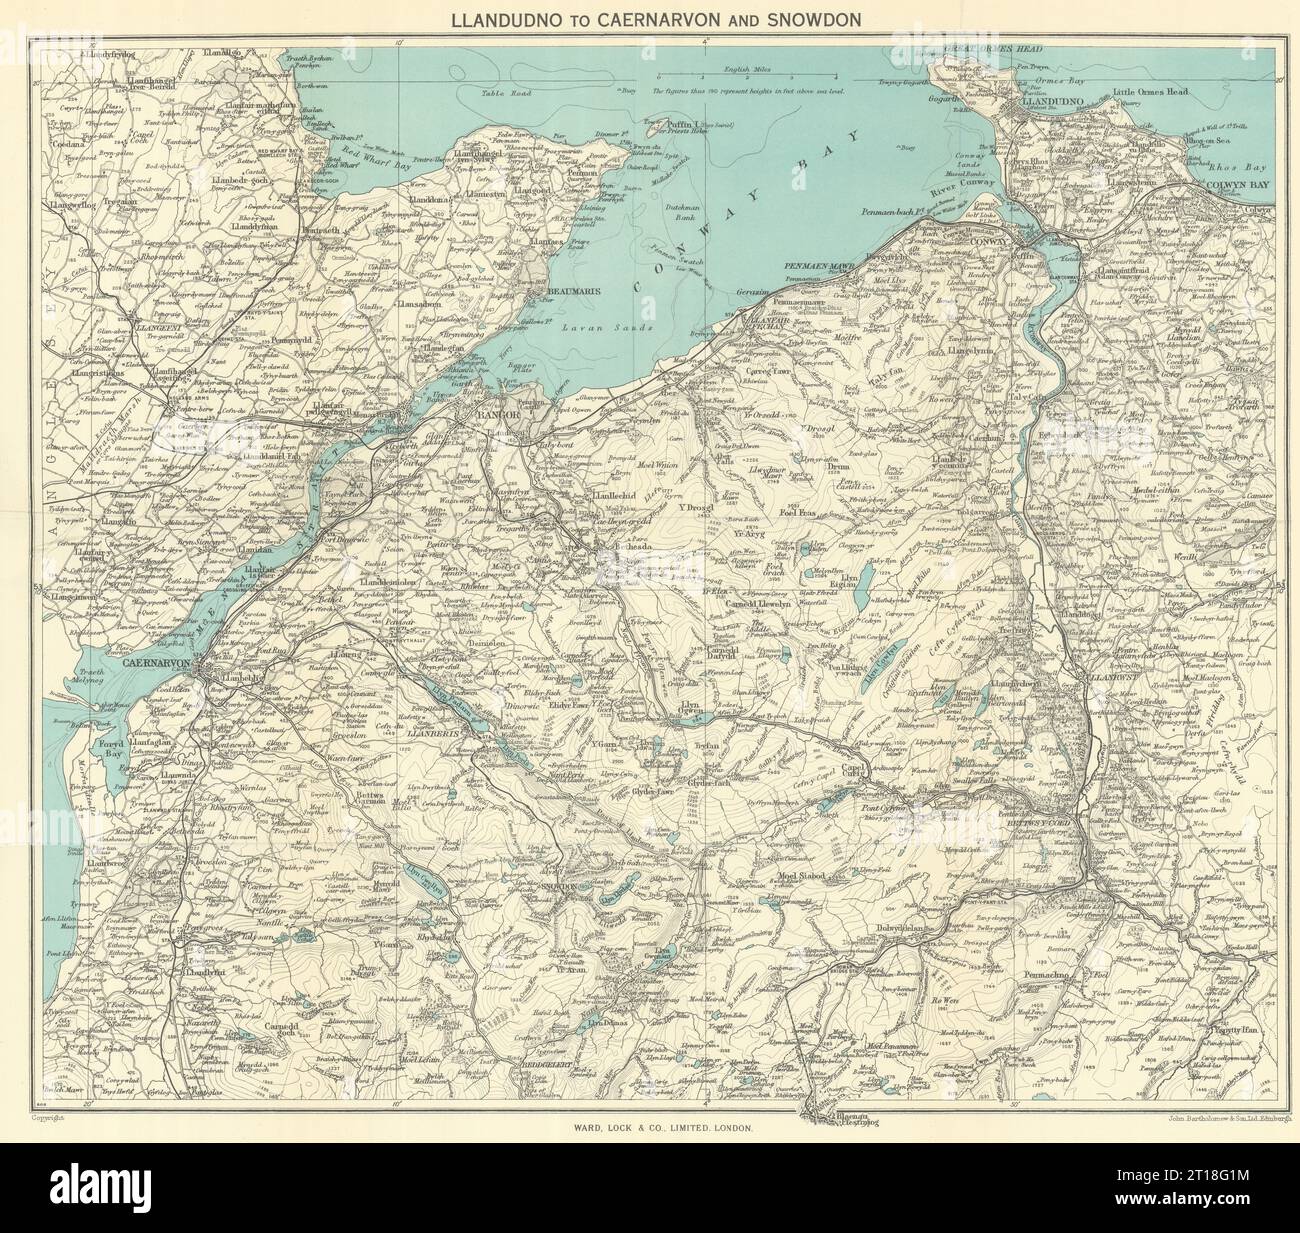 NW WALES. Llandudno Caernarvon Snowdonia Anglesey Bangor. STATIONSSCHLOSS 1951 MAP Stockfoto